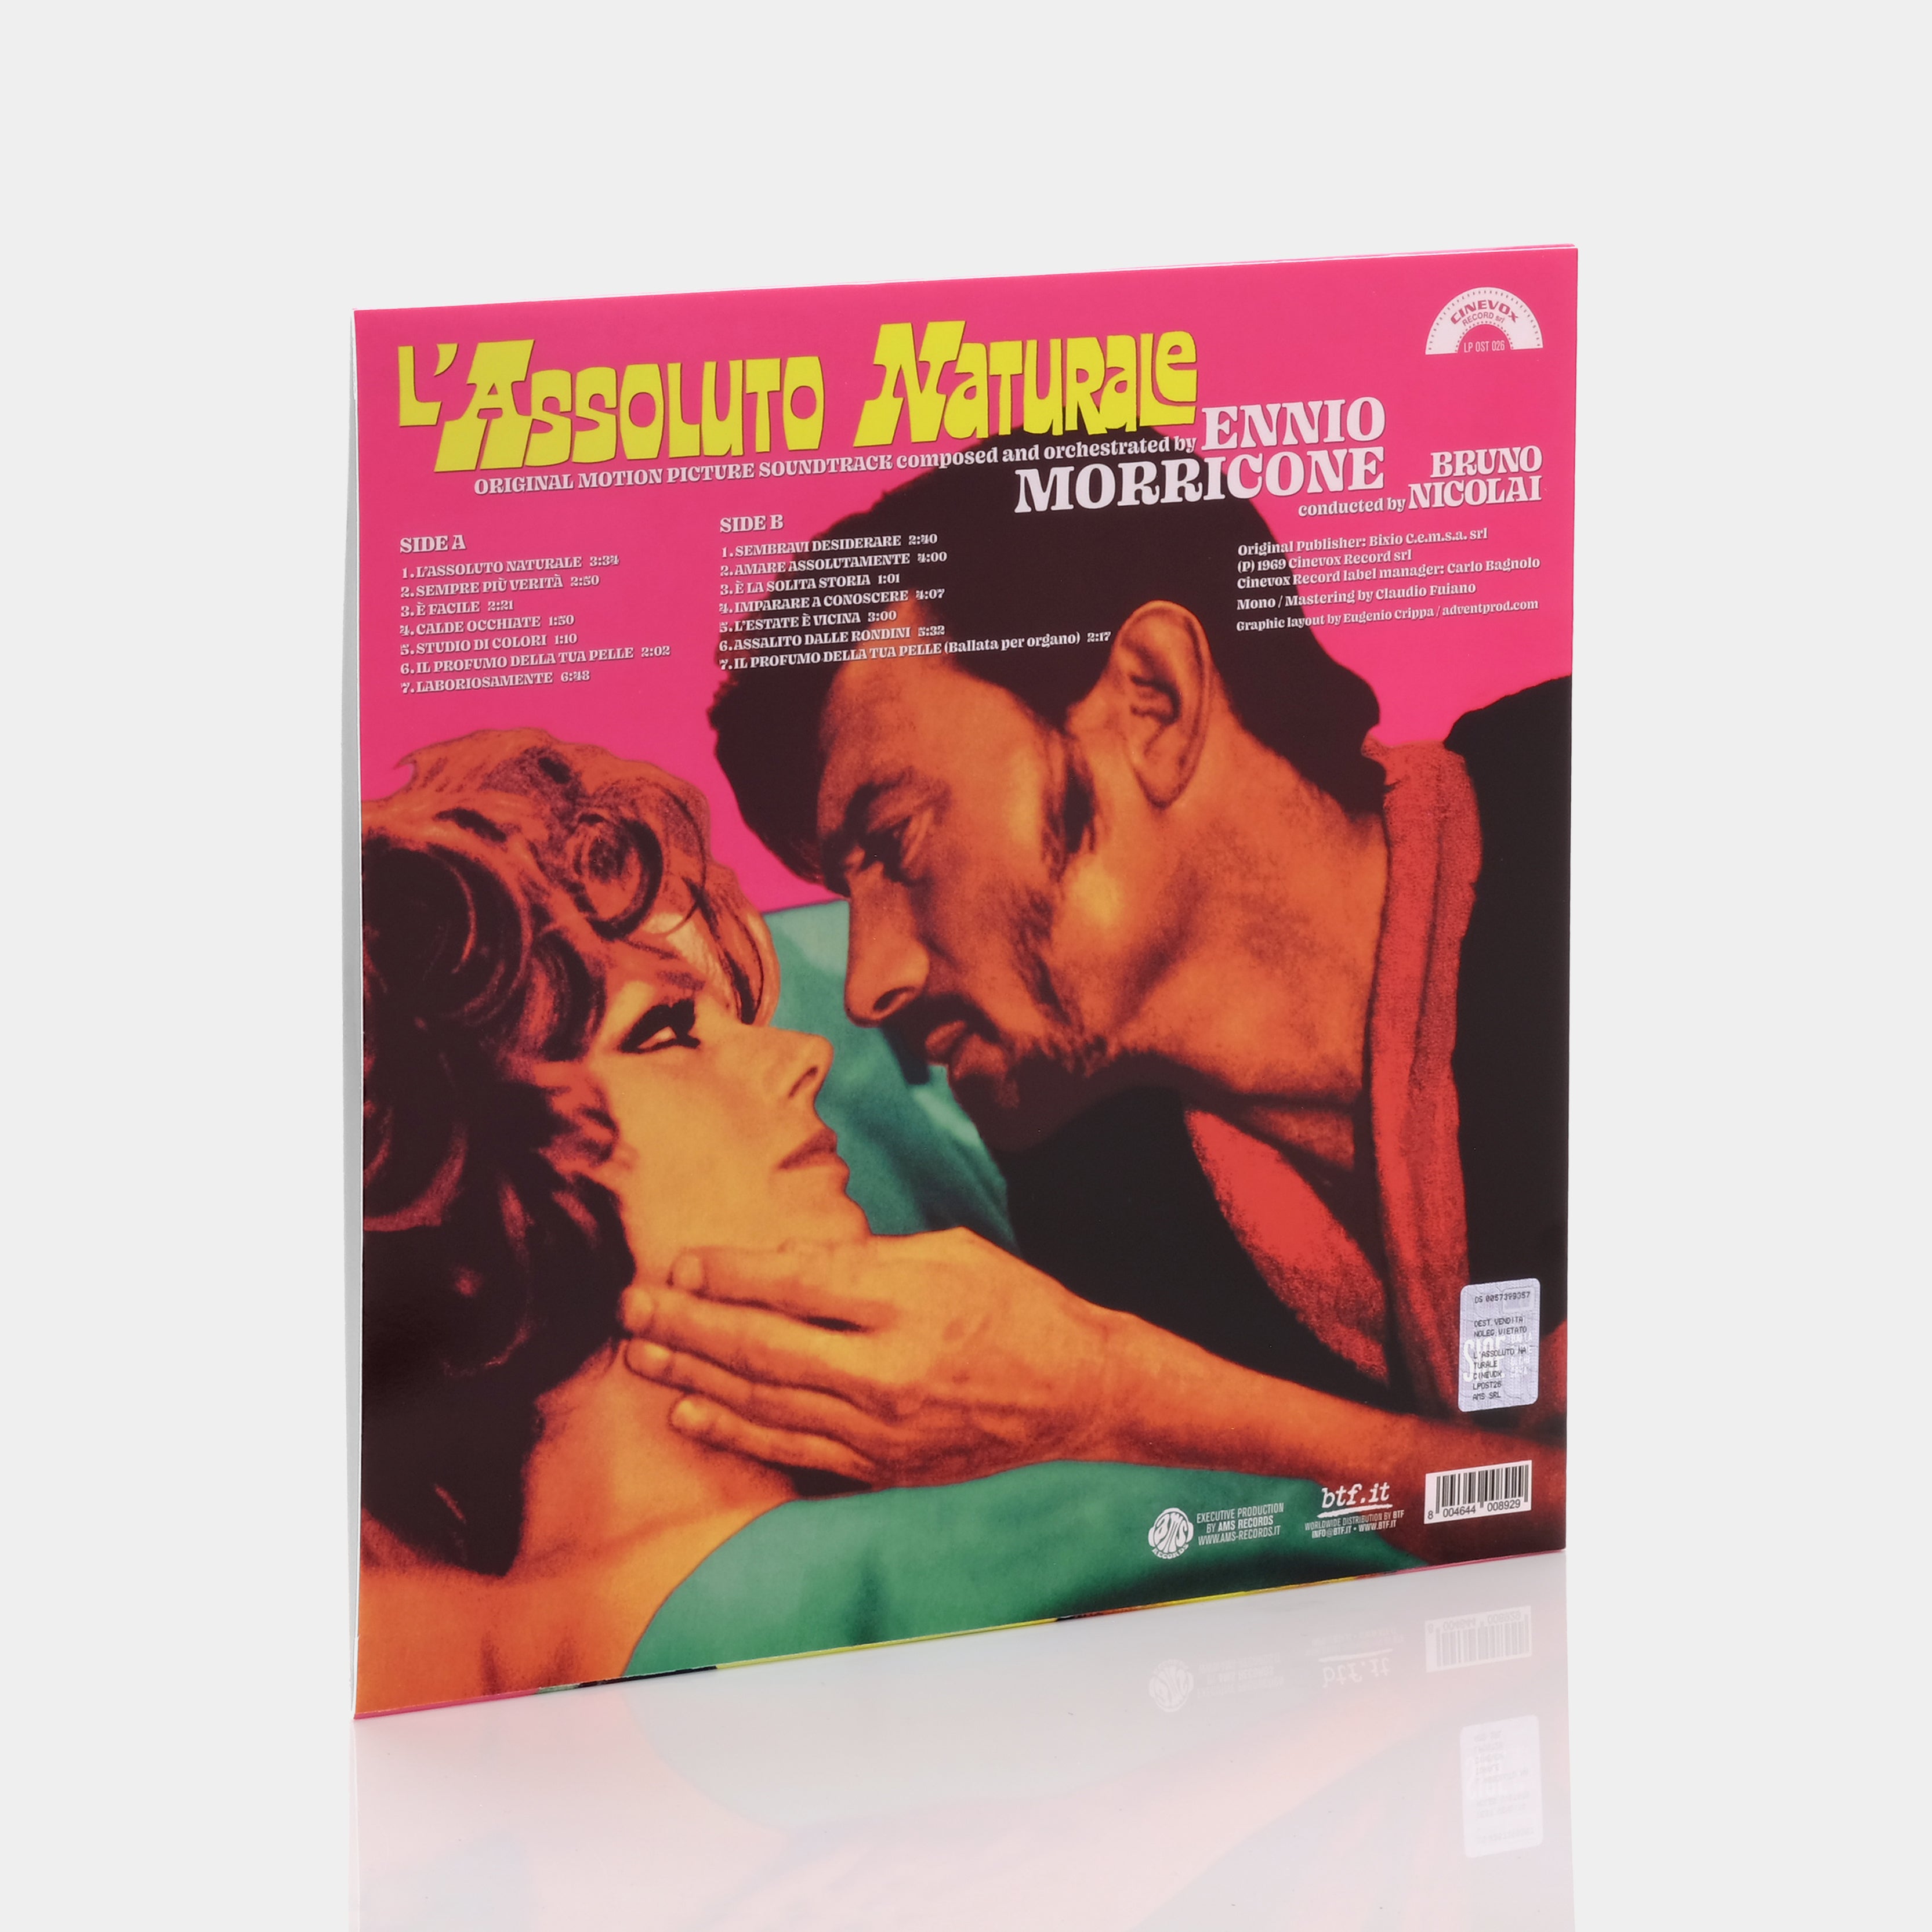 Ennio Morricone - L'Assoluto Naturale (Original Motion Picture Soundtrack) LP Pink Vinyl Record